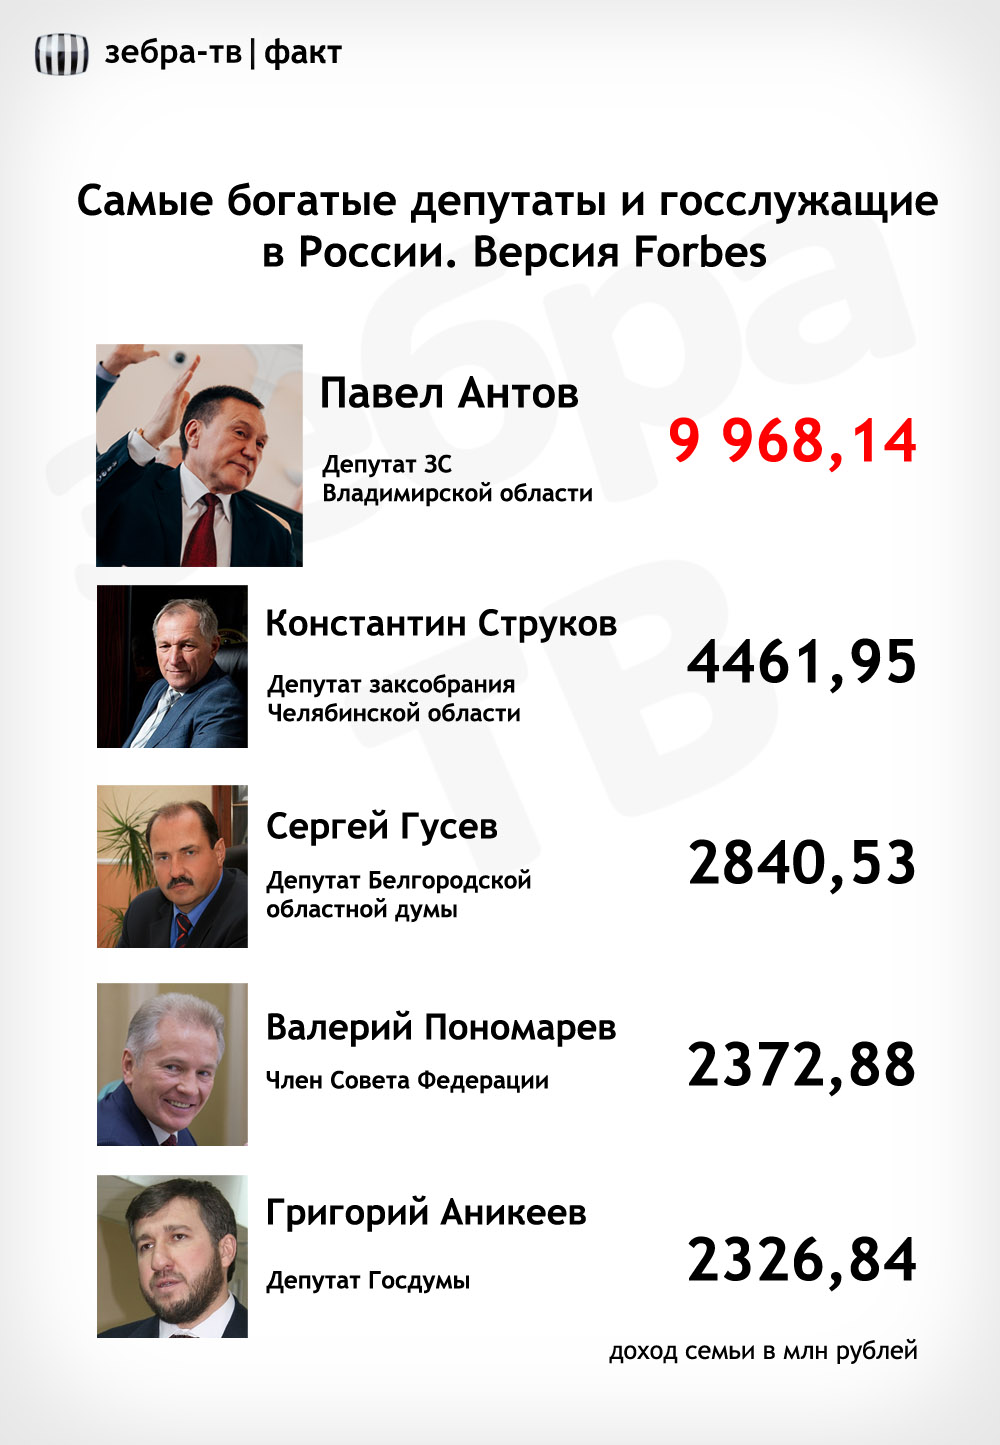 fact_Antov_money_Forbs.jpg